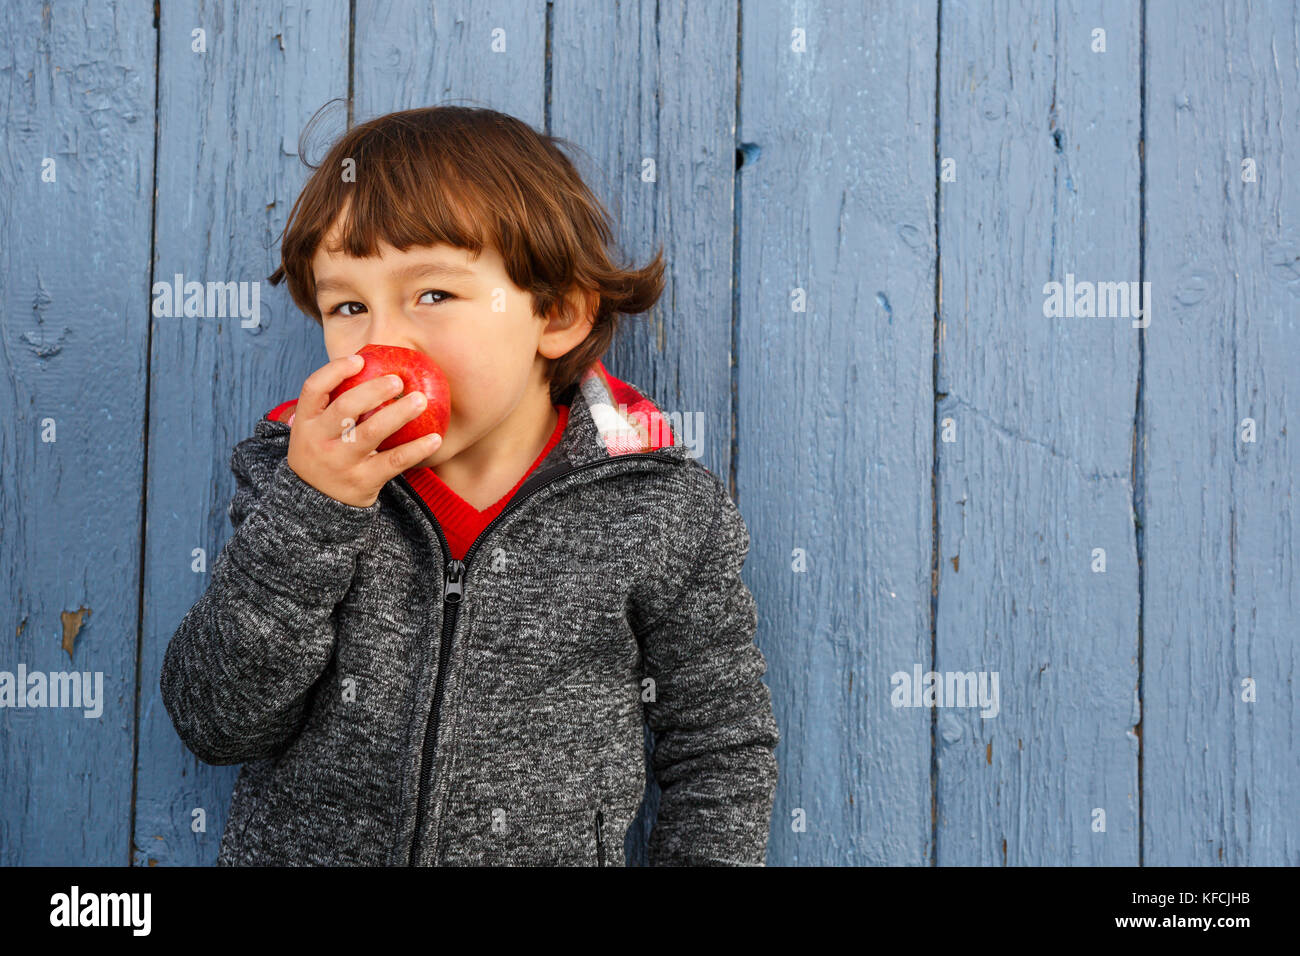 Little boy child kid eating apple fruit smiling healthy autumn Stock Photo